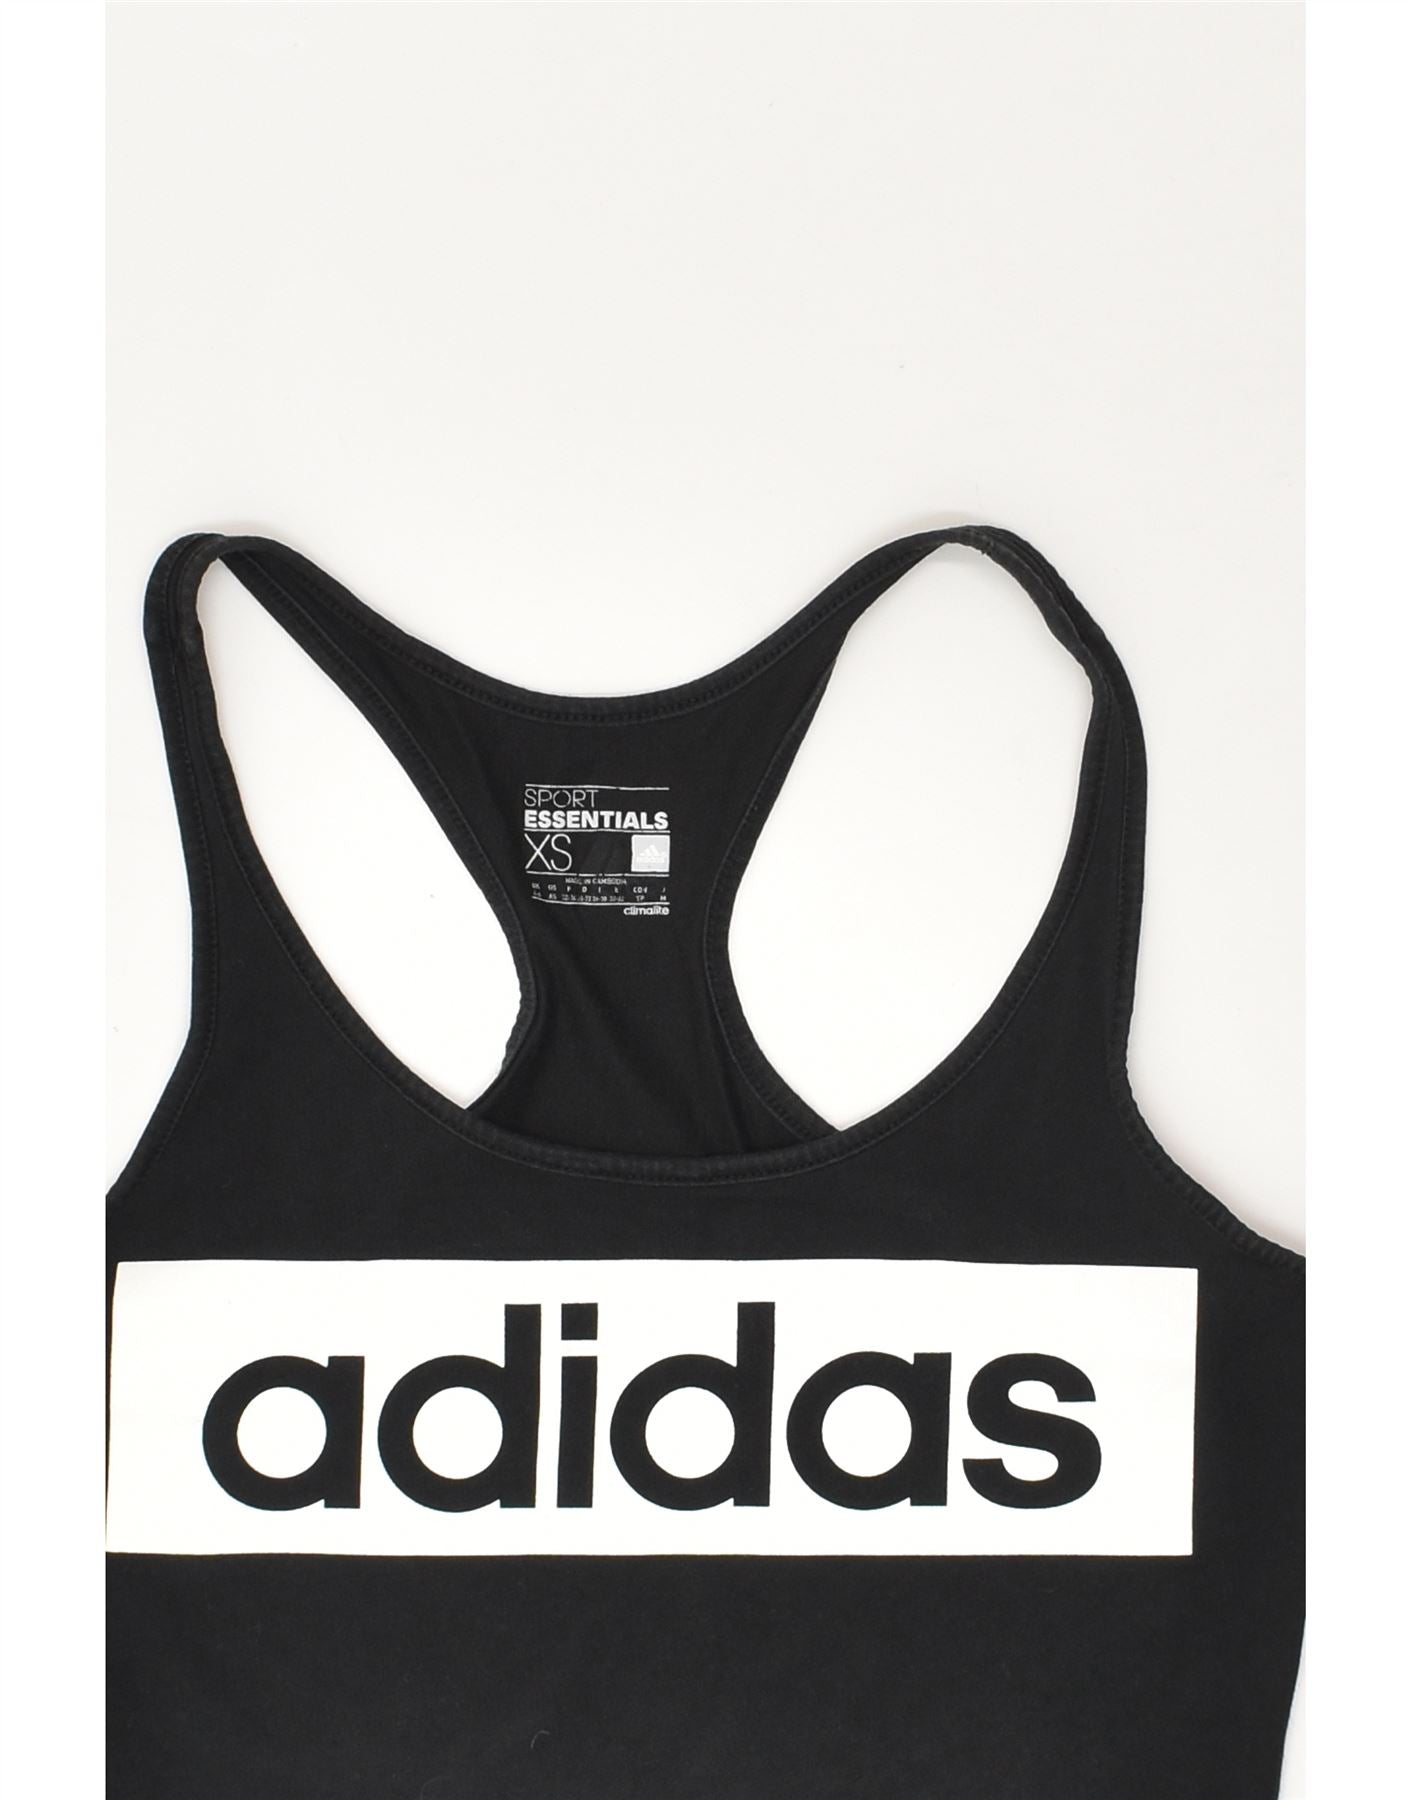 ADIDAS Womens Sport Bra Top UK 6 XS Black Cotton, Vintage & Second-Hand  Clothing Online